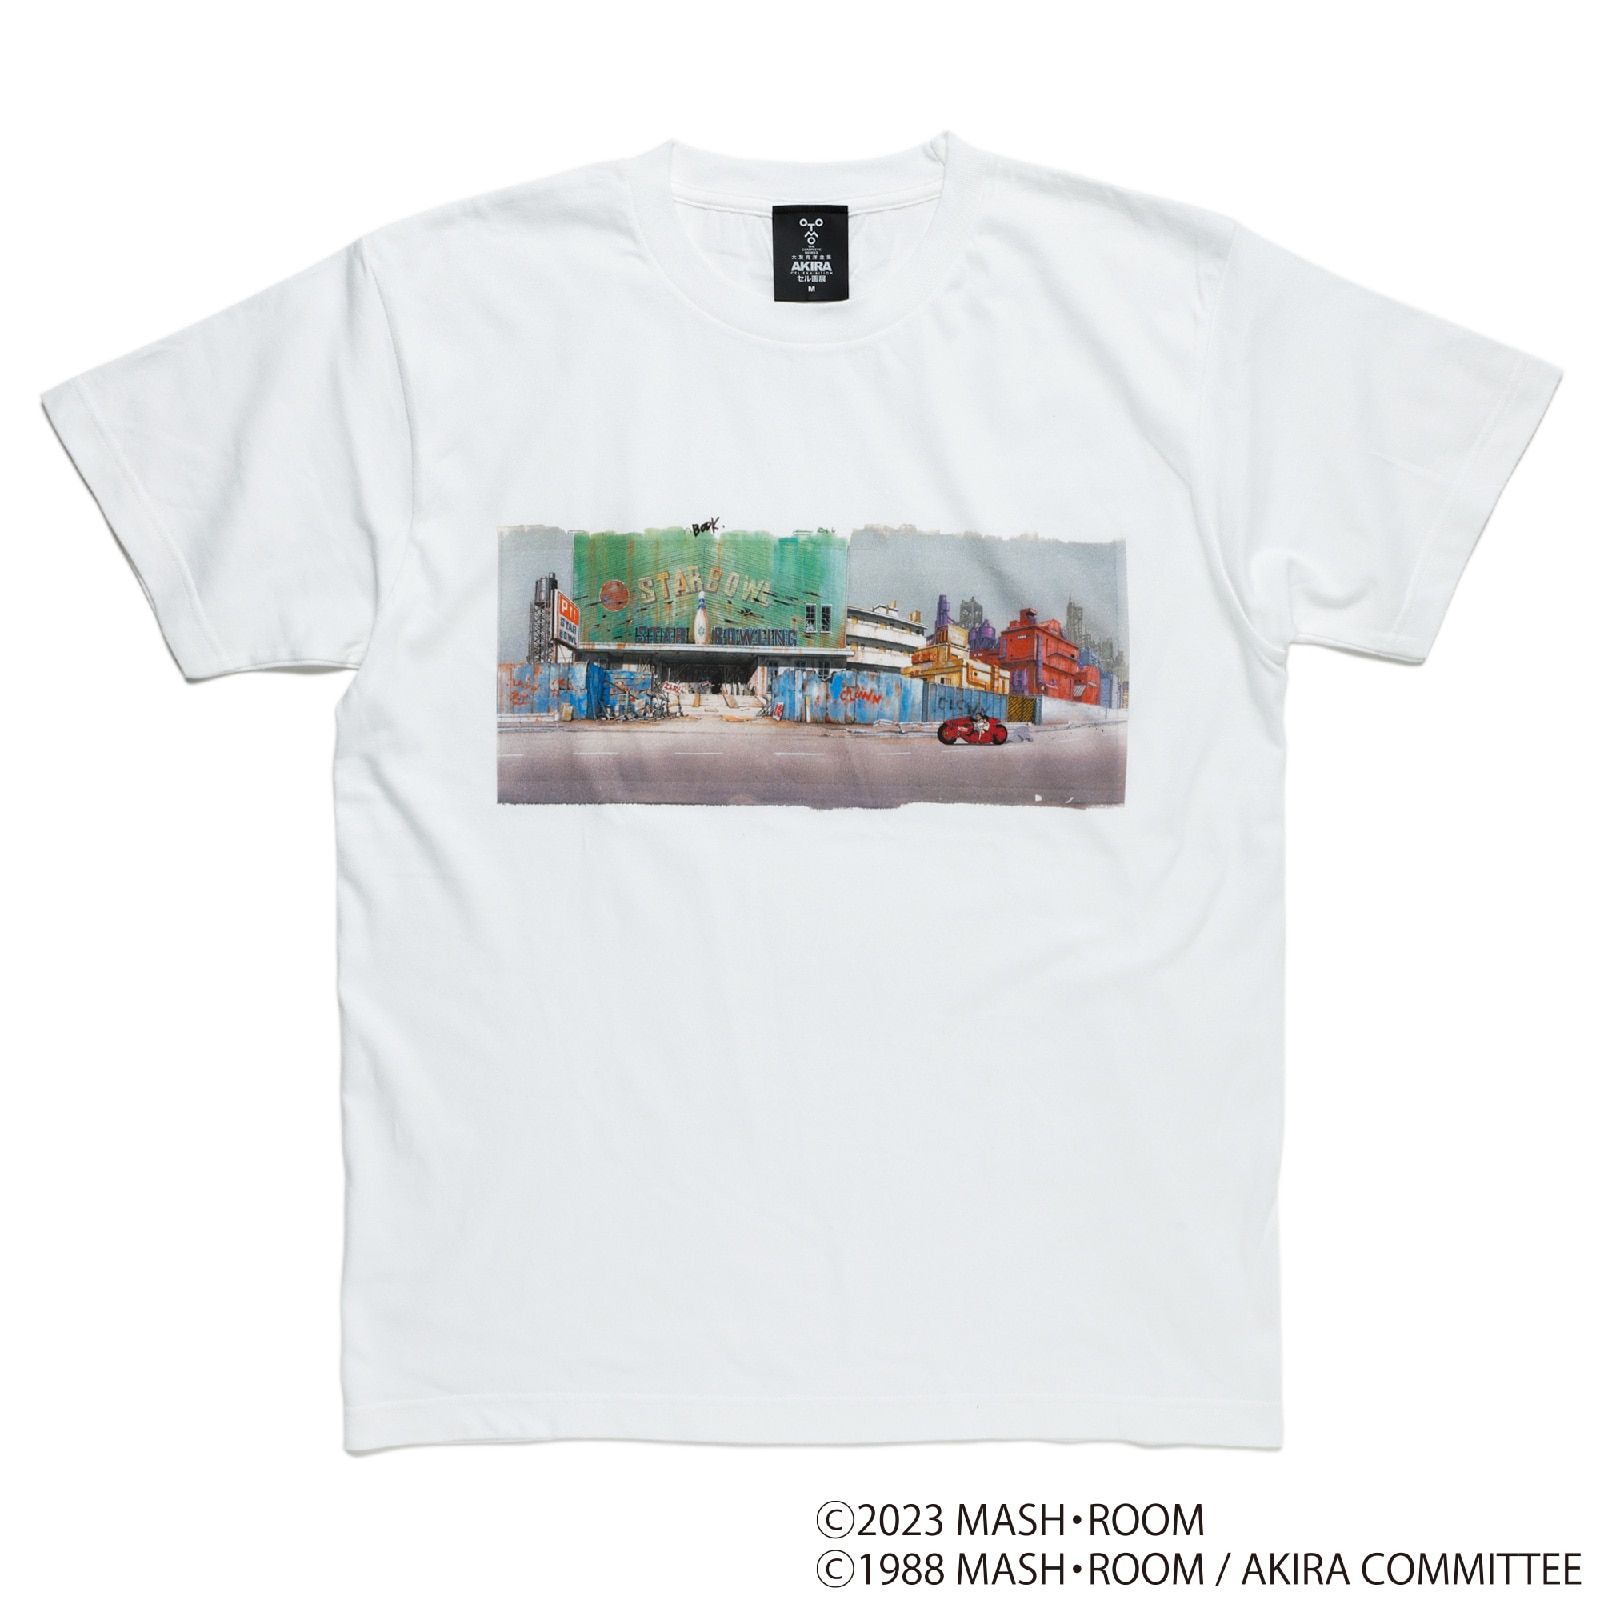 Tシャツ/カットソー(半袖/袖なし)AKIRA 展示会限定tシャツ 2枚セット Lサイズ